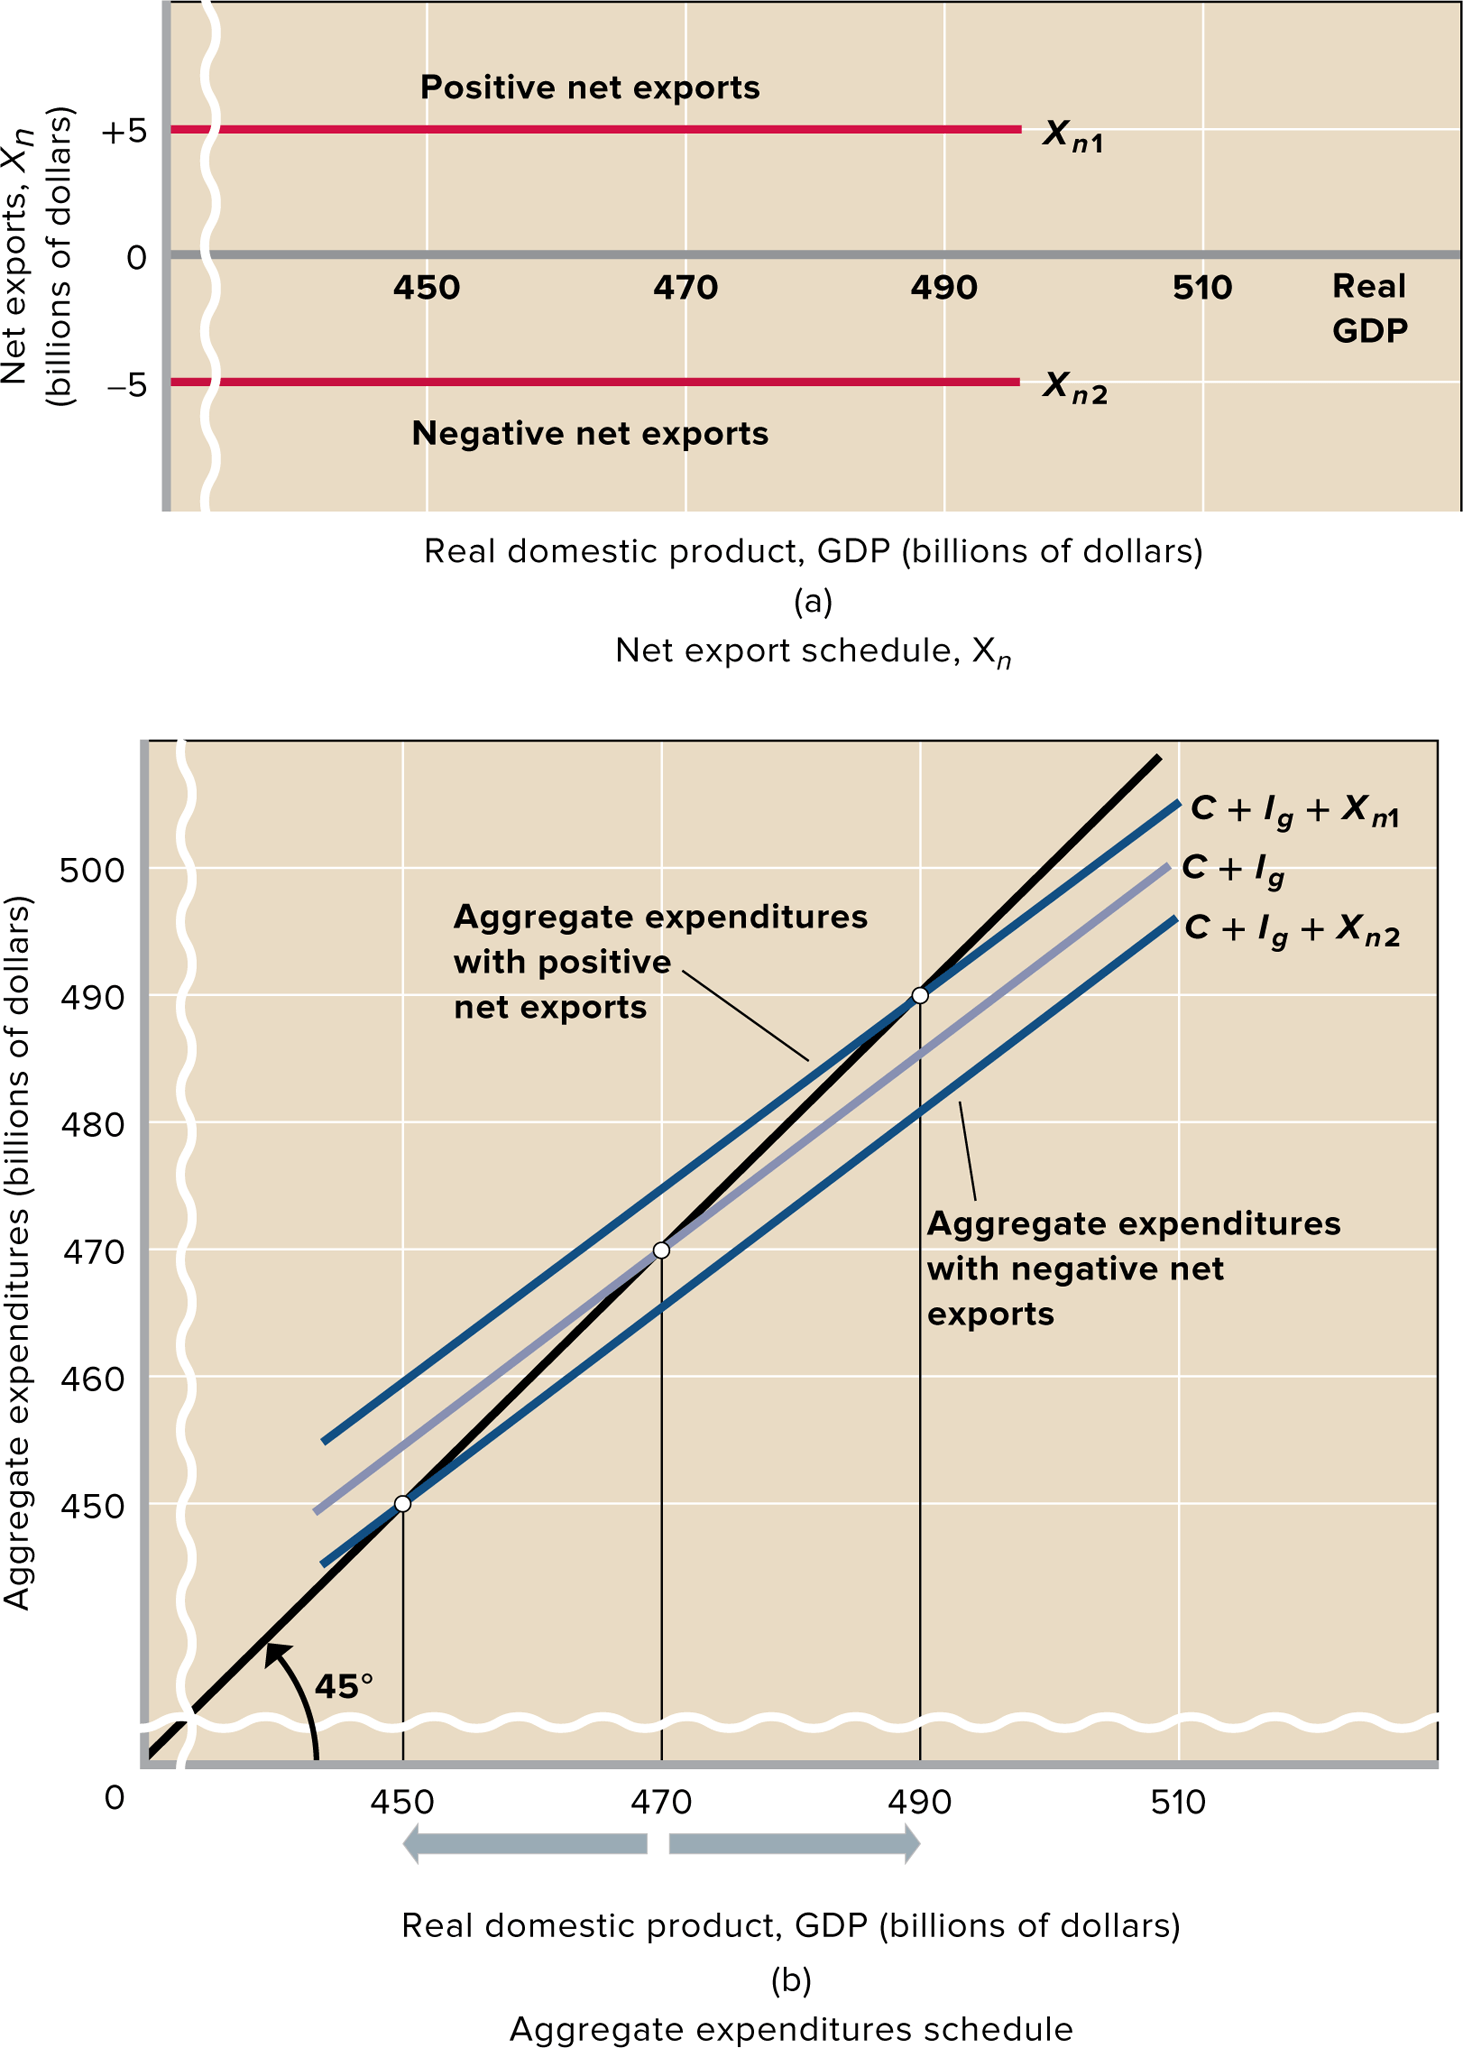 net export schedule and aggregate expenditures schedule